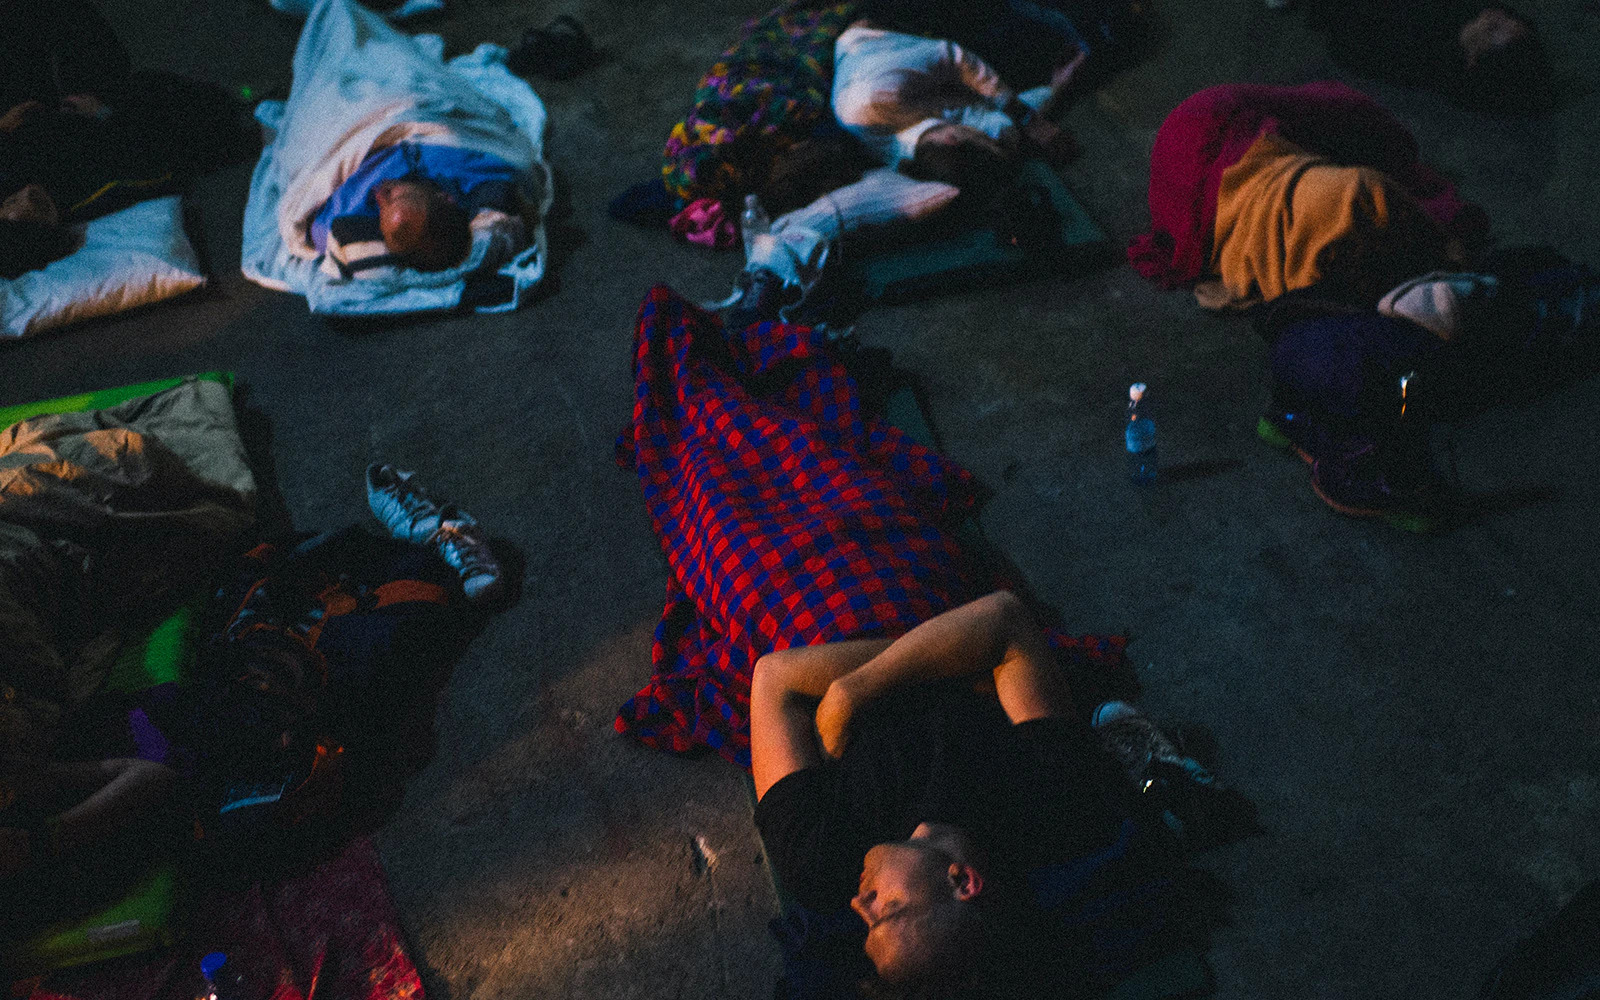 sleeping concert goers, photo by kasia zacharko